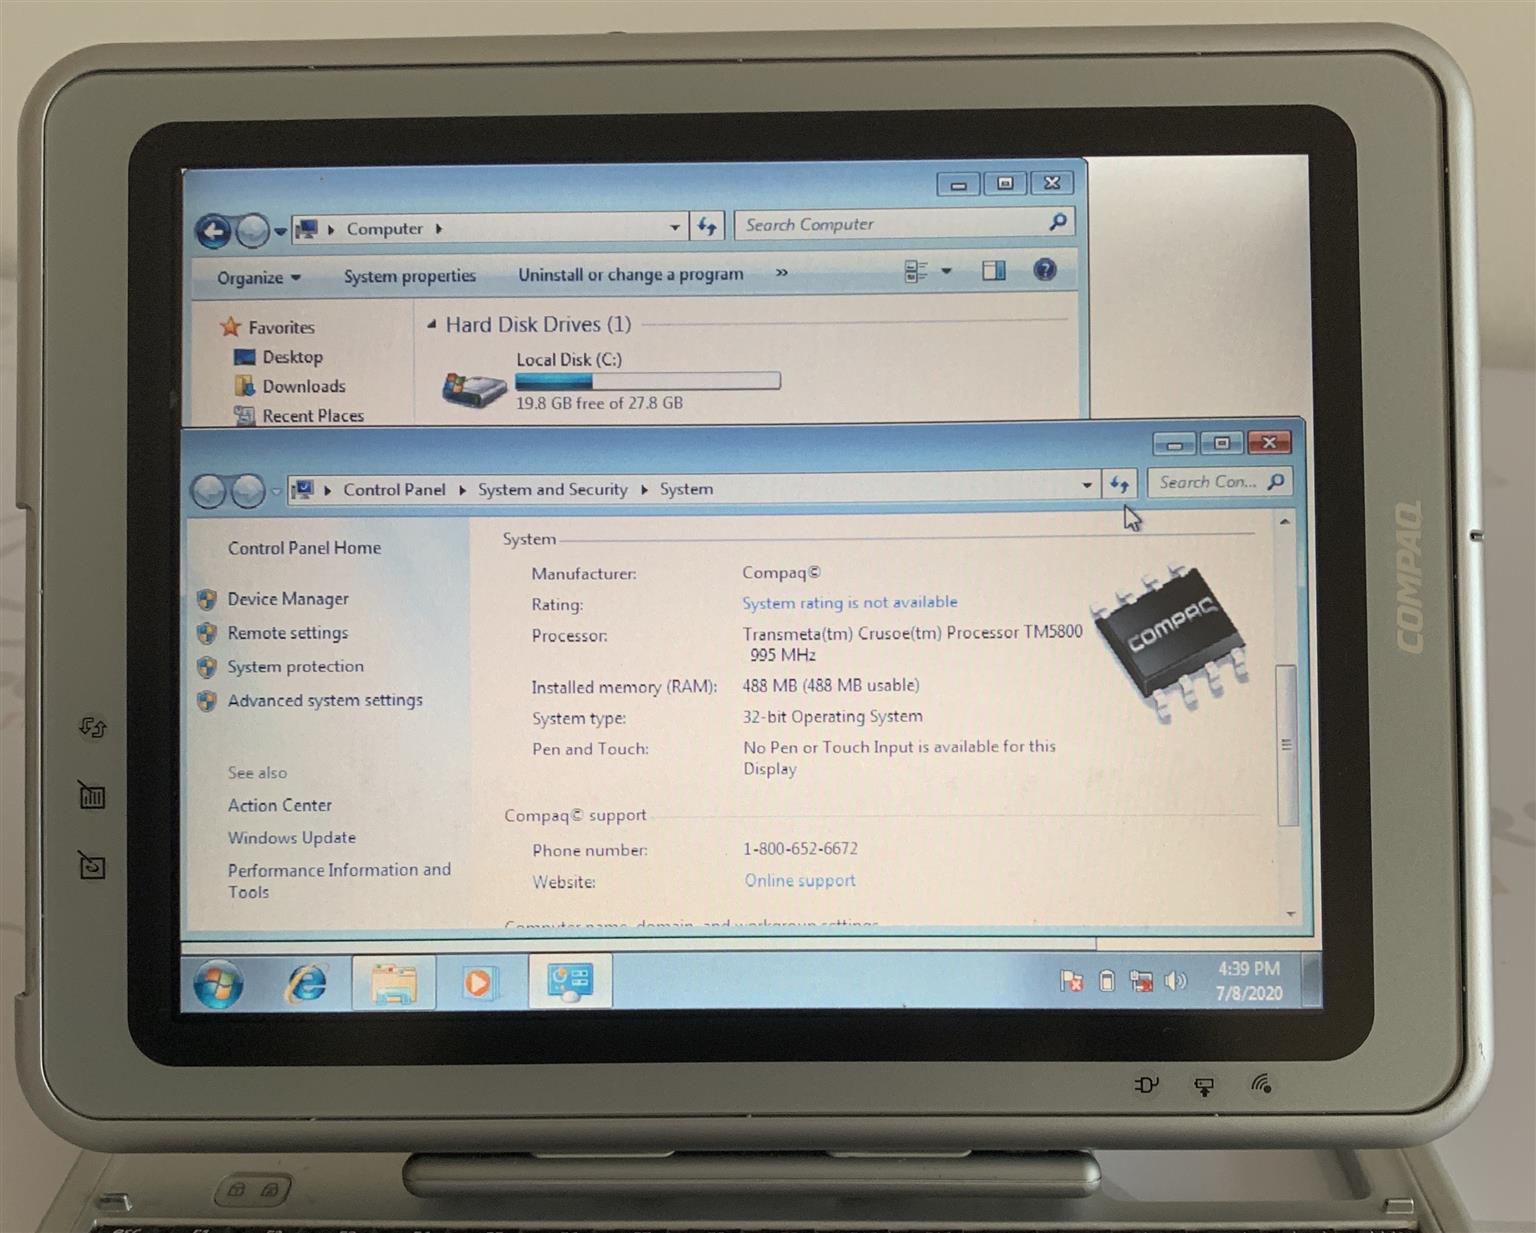 Compaq Swivel Beginners Basic Laptop R1200